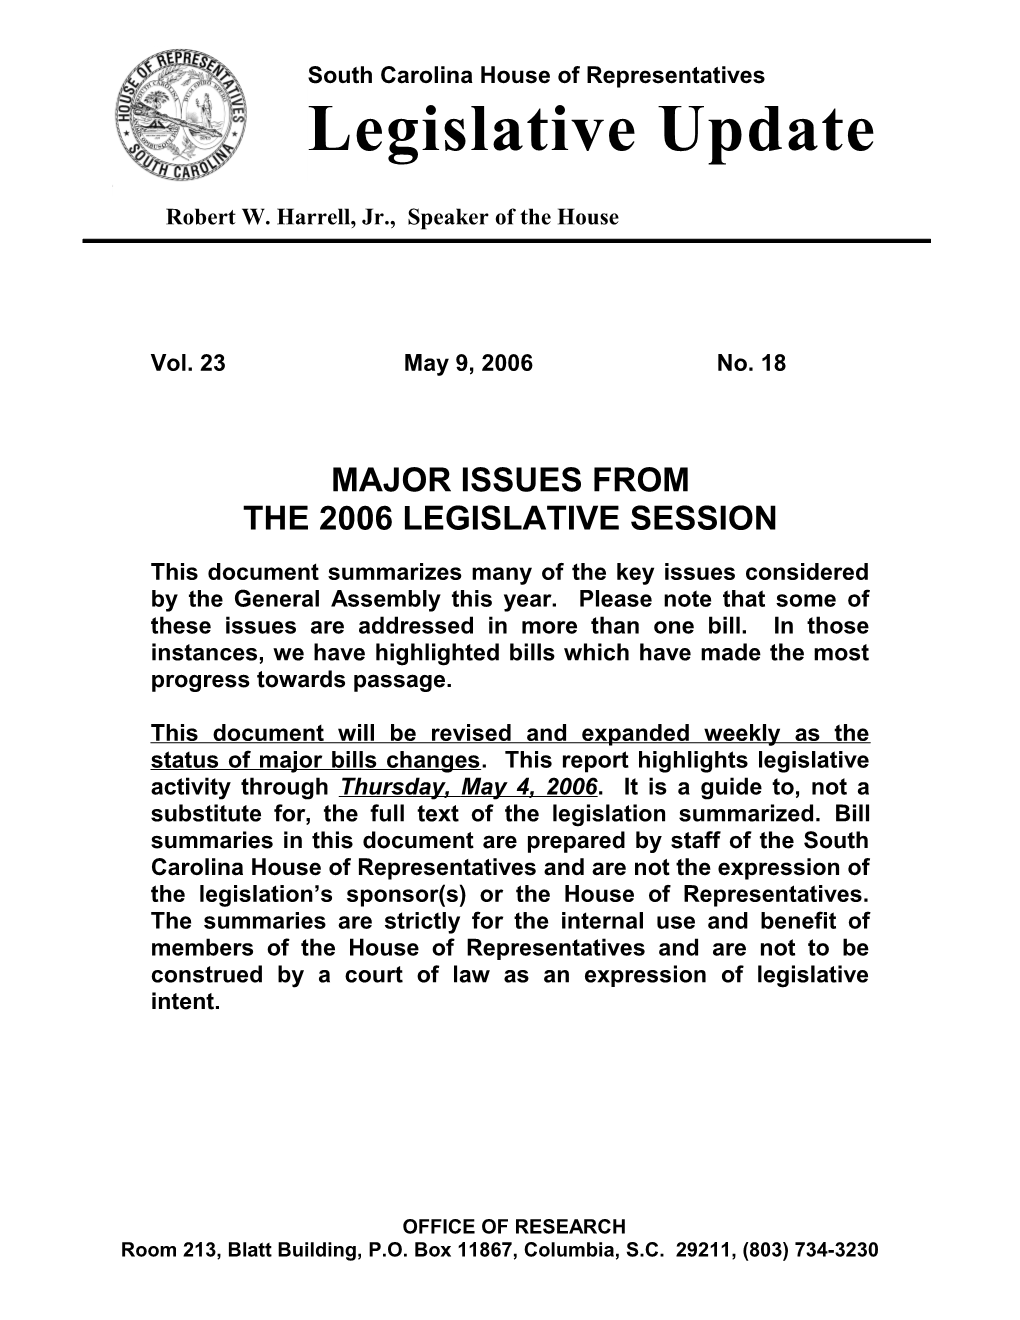 Legislative Update - Vol. 23 No. 18 May 9, 2006 - South Carolina Legislature Online